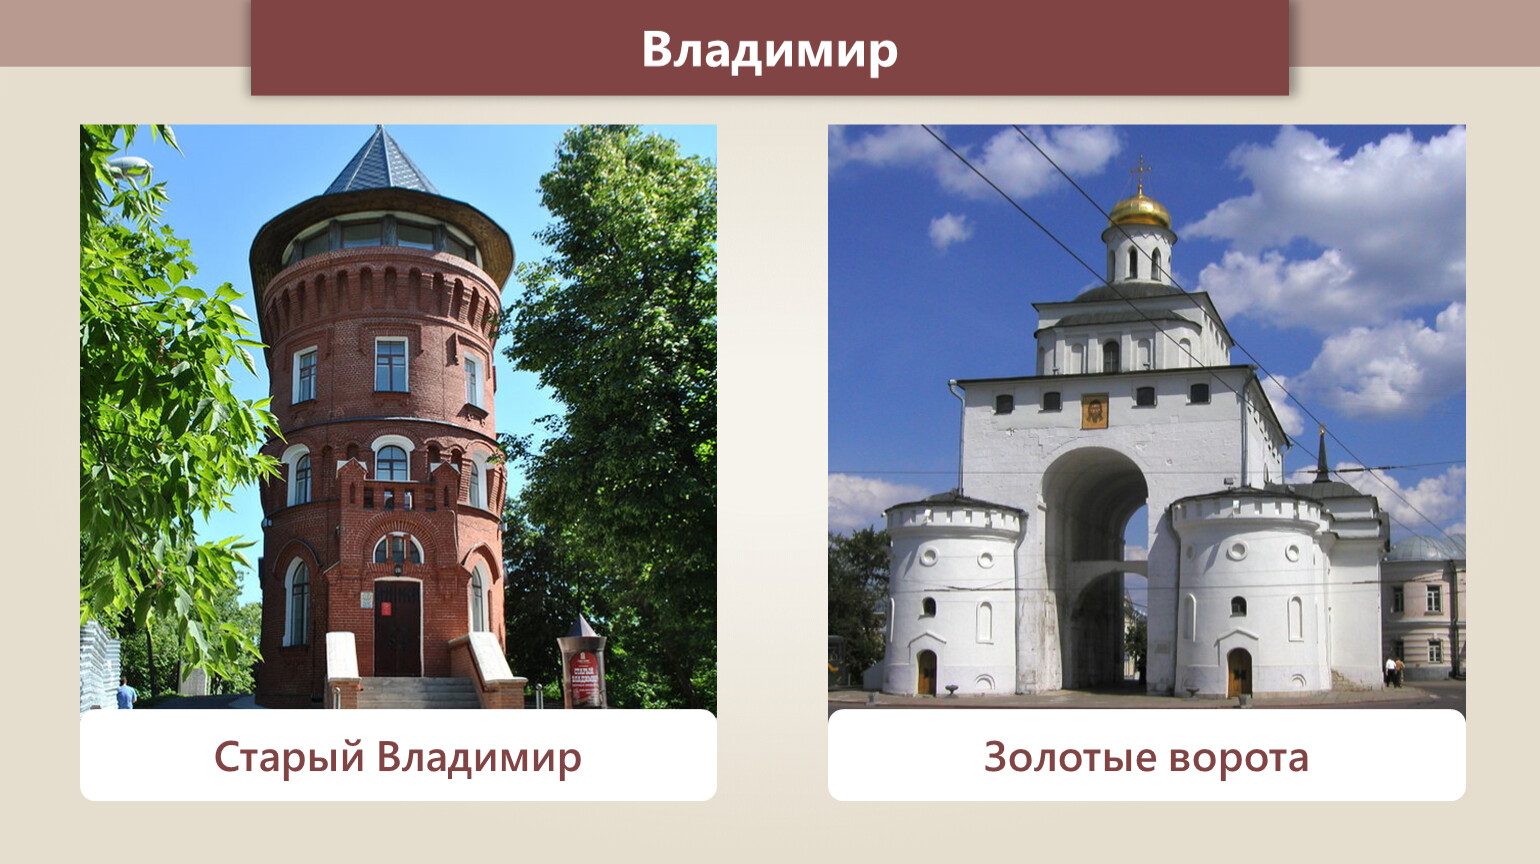 Иринины ворота во Владимире